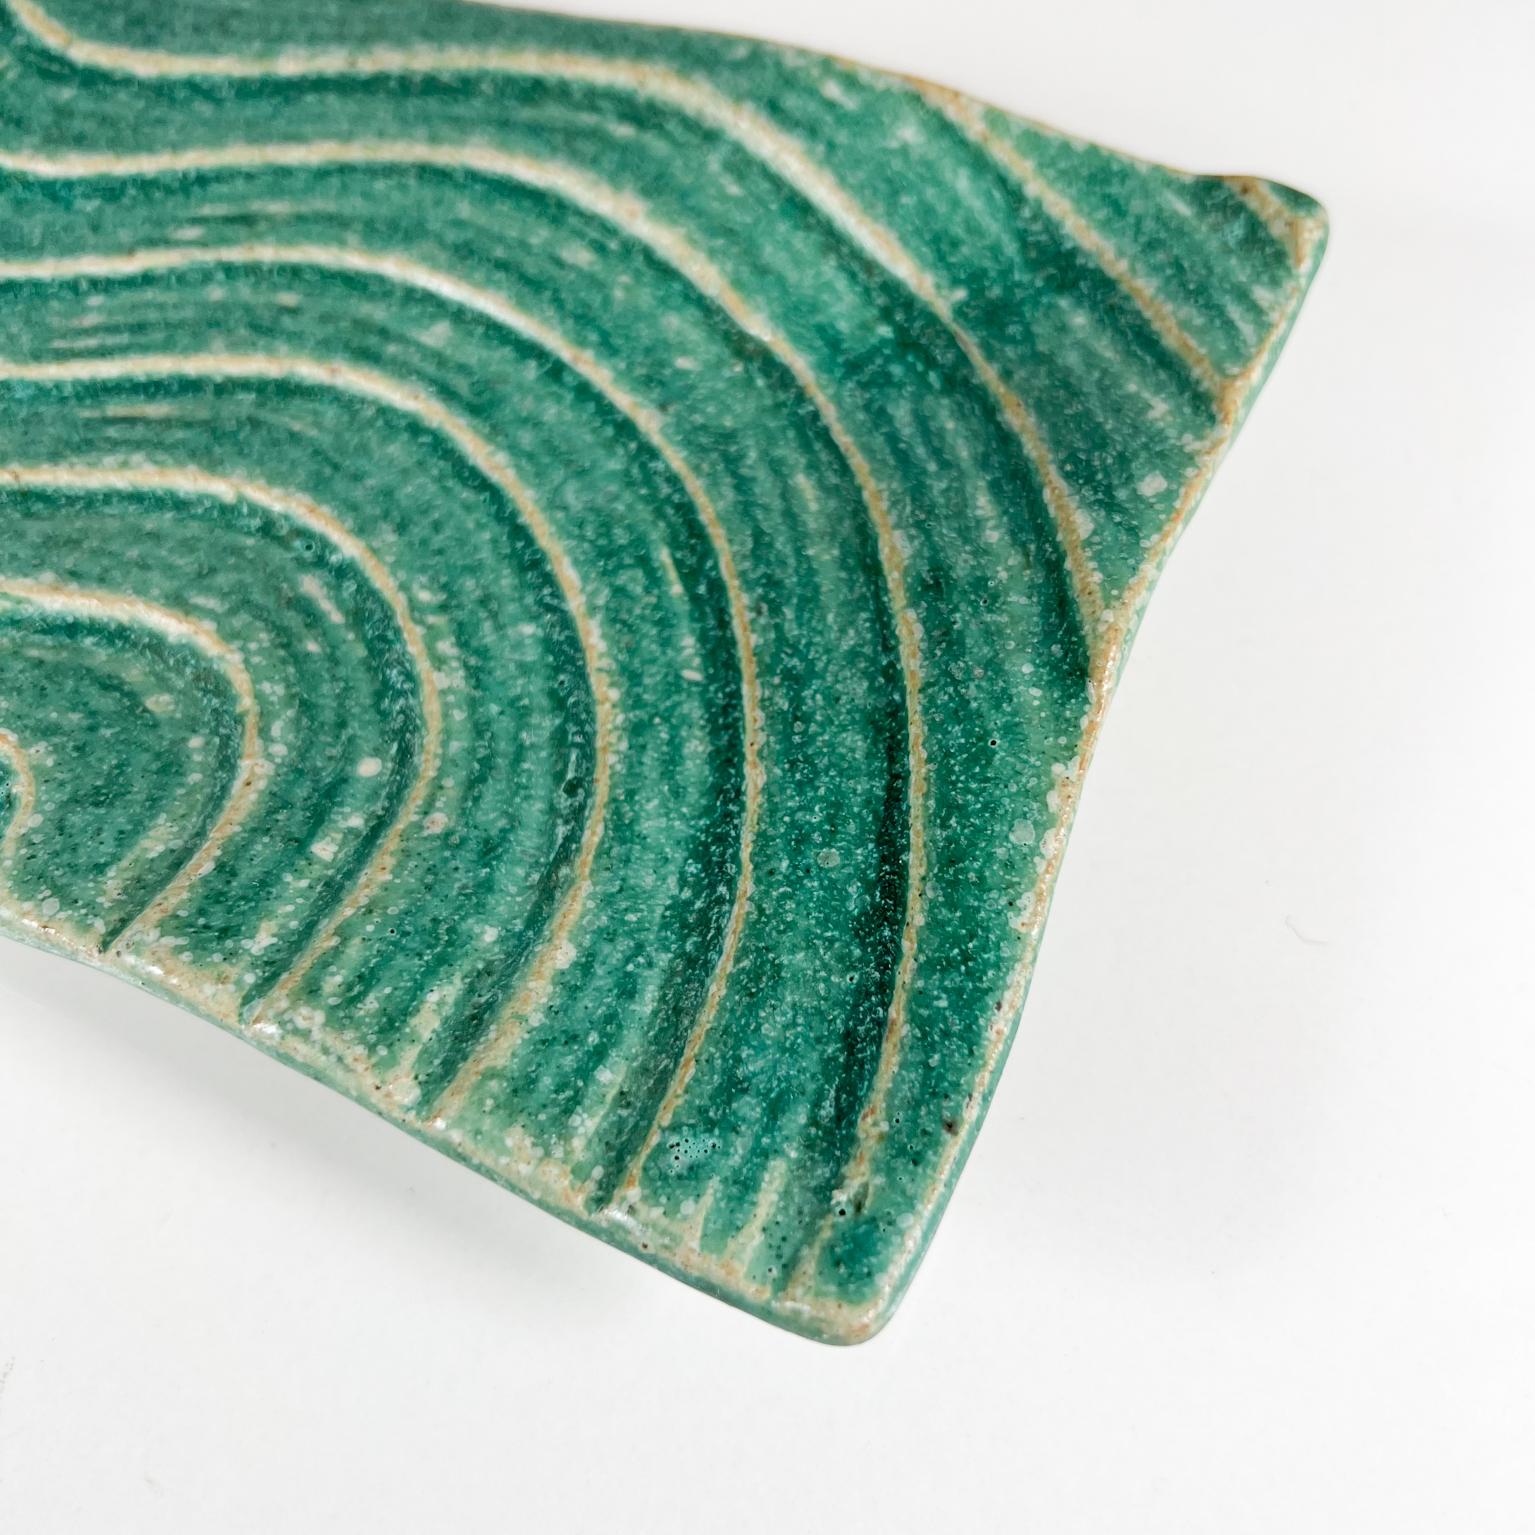 1970s Sculptural Green Wave Dish Studio Pottery Art Ed Thompson In Good Condition For Sale In Chula Vista, CA